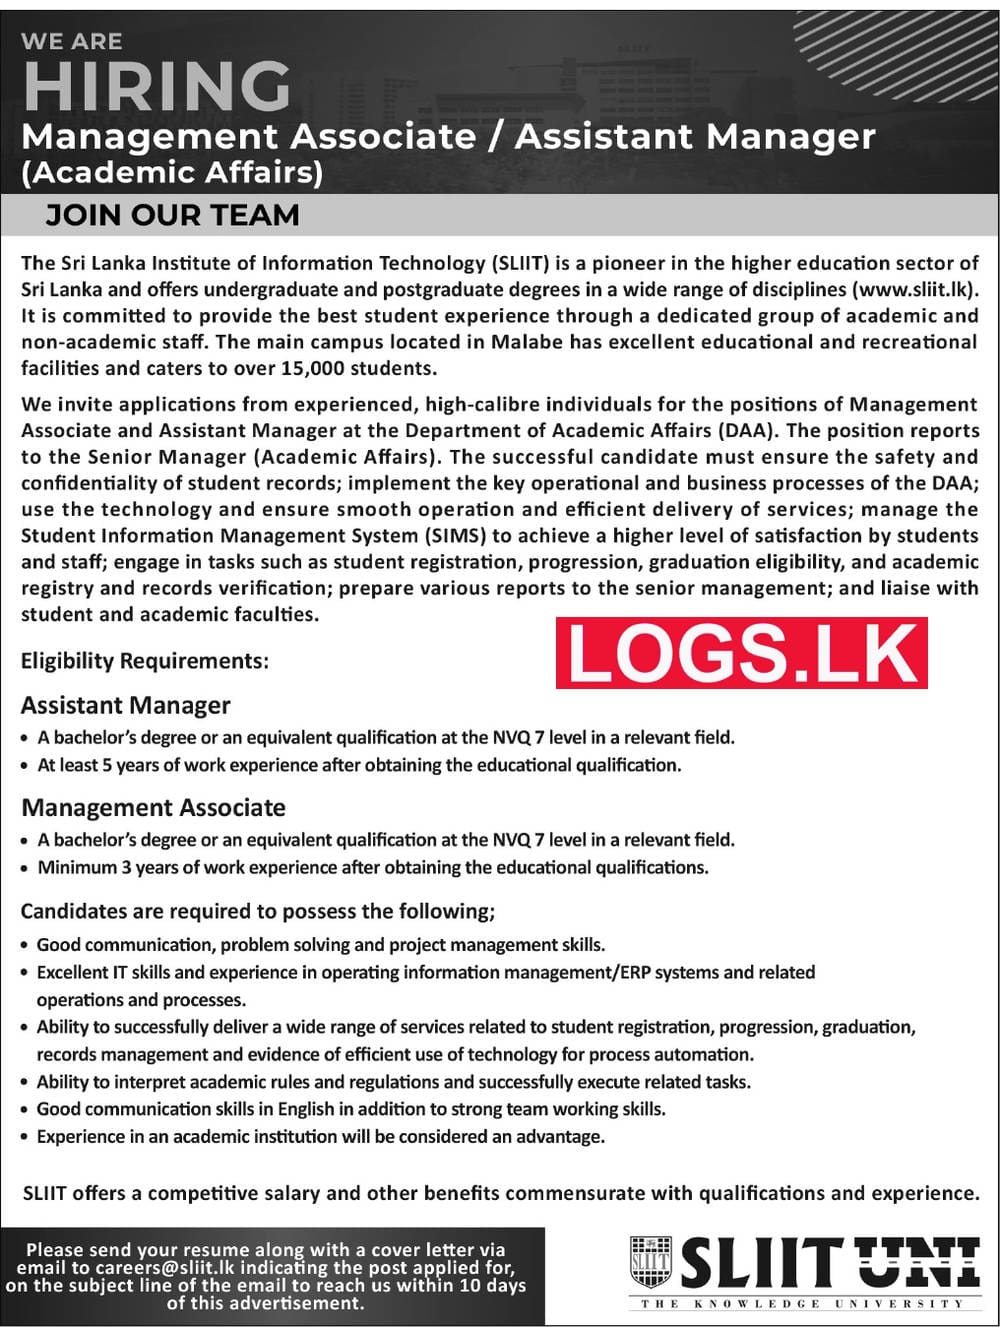 Management Associate - SLIIT University Job Vacancies 2023 Application Form, Details Download